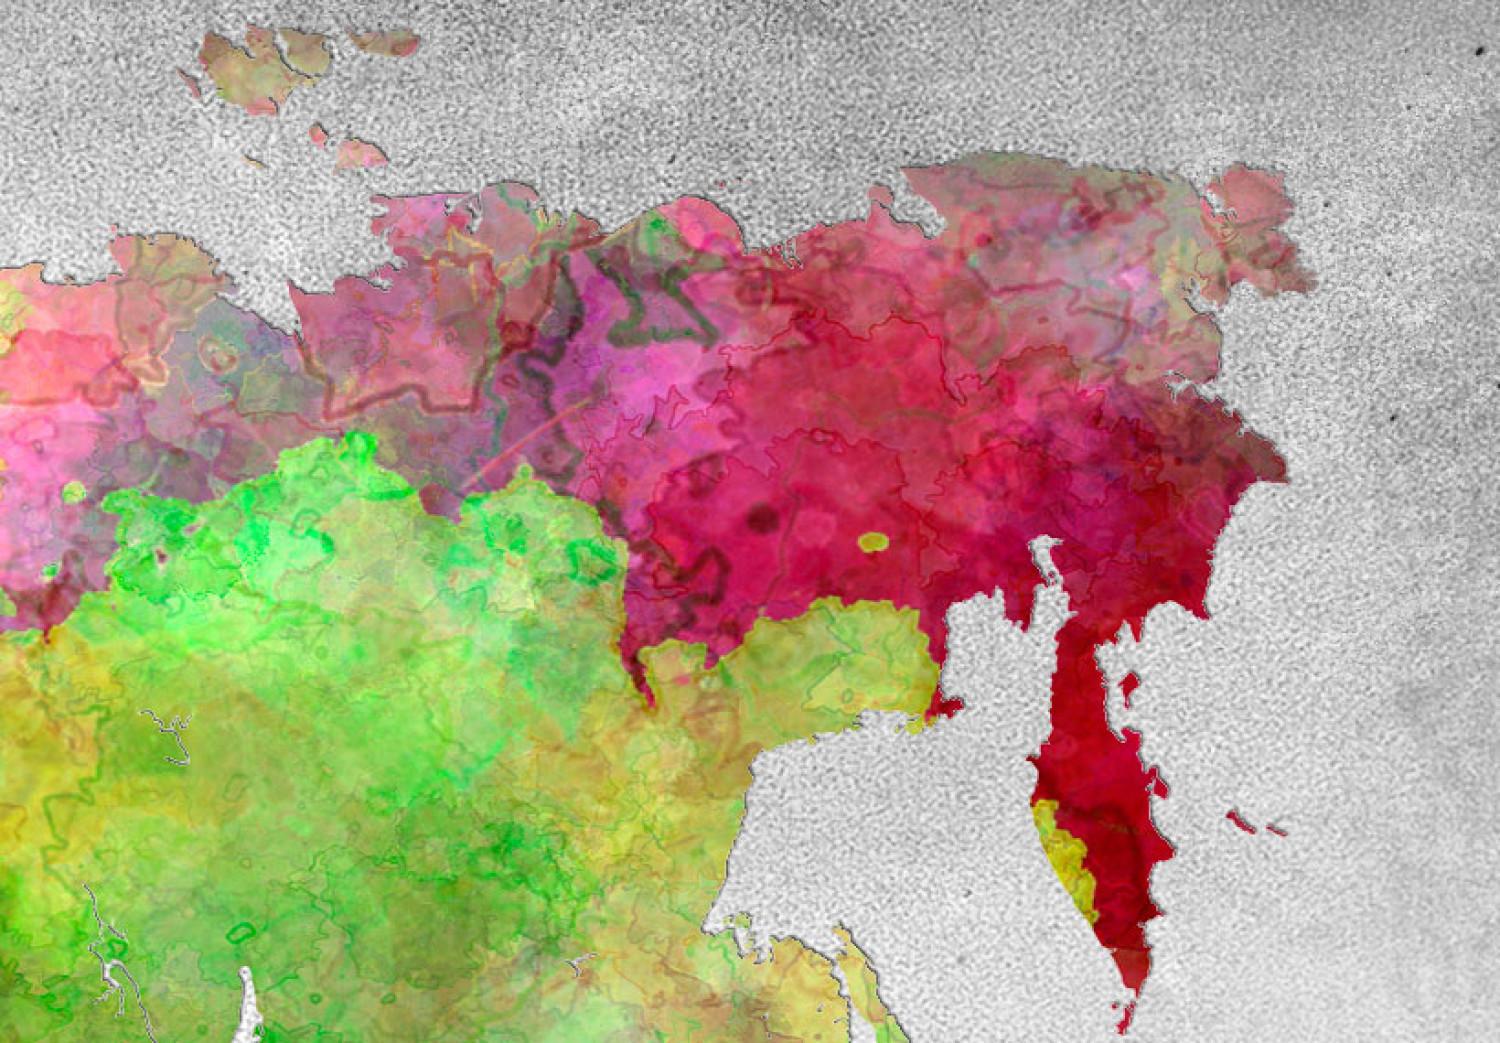 Tablero decorativo en corcho Diversity of World [Cork Map]